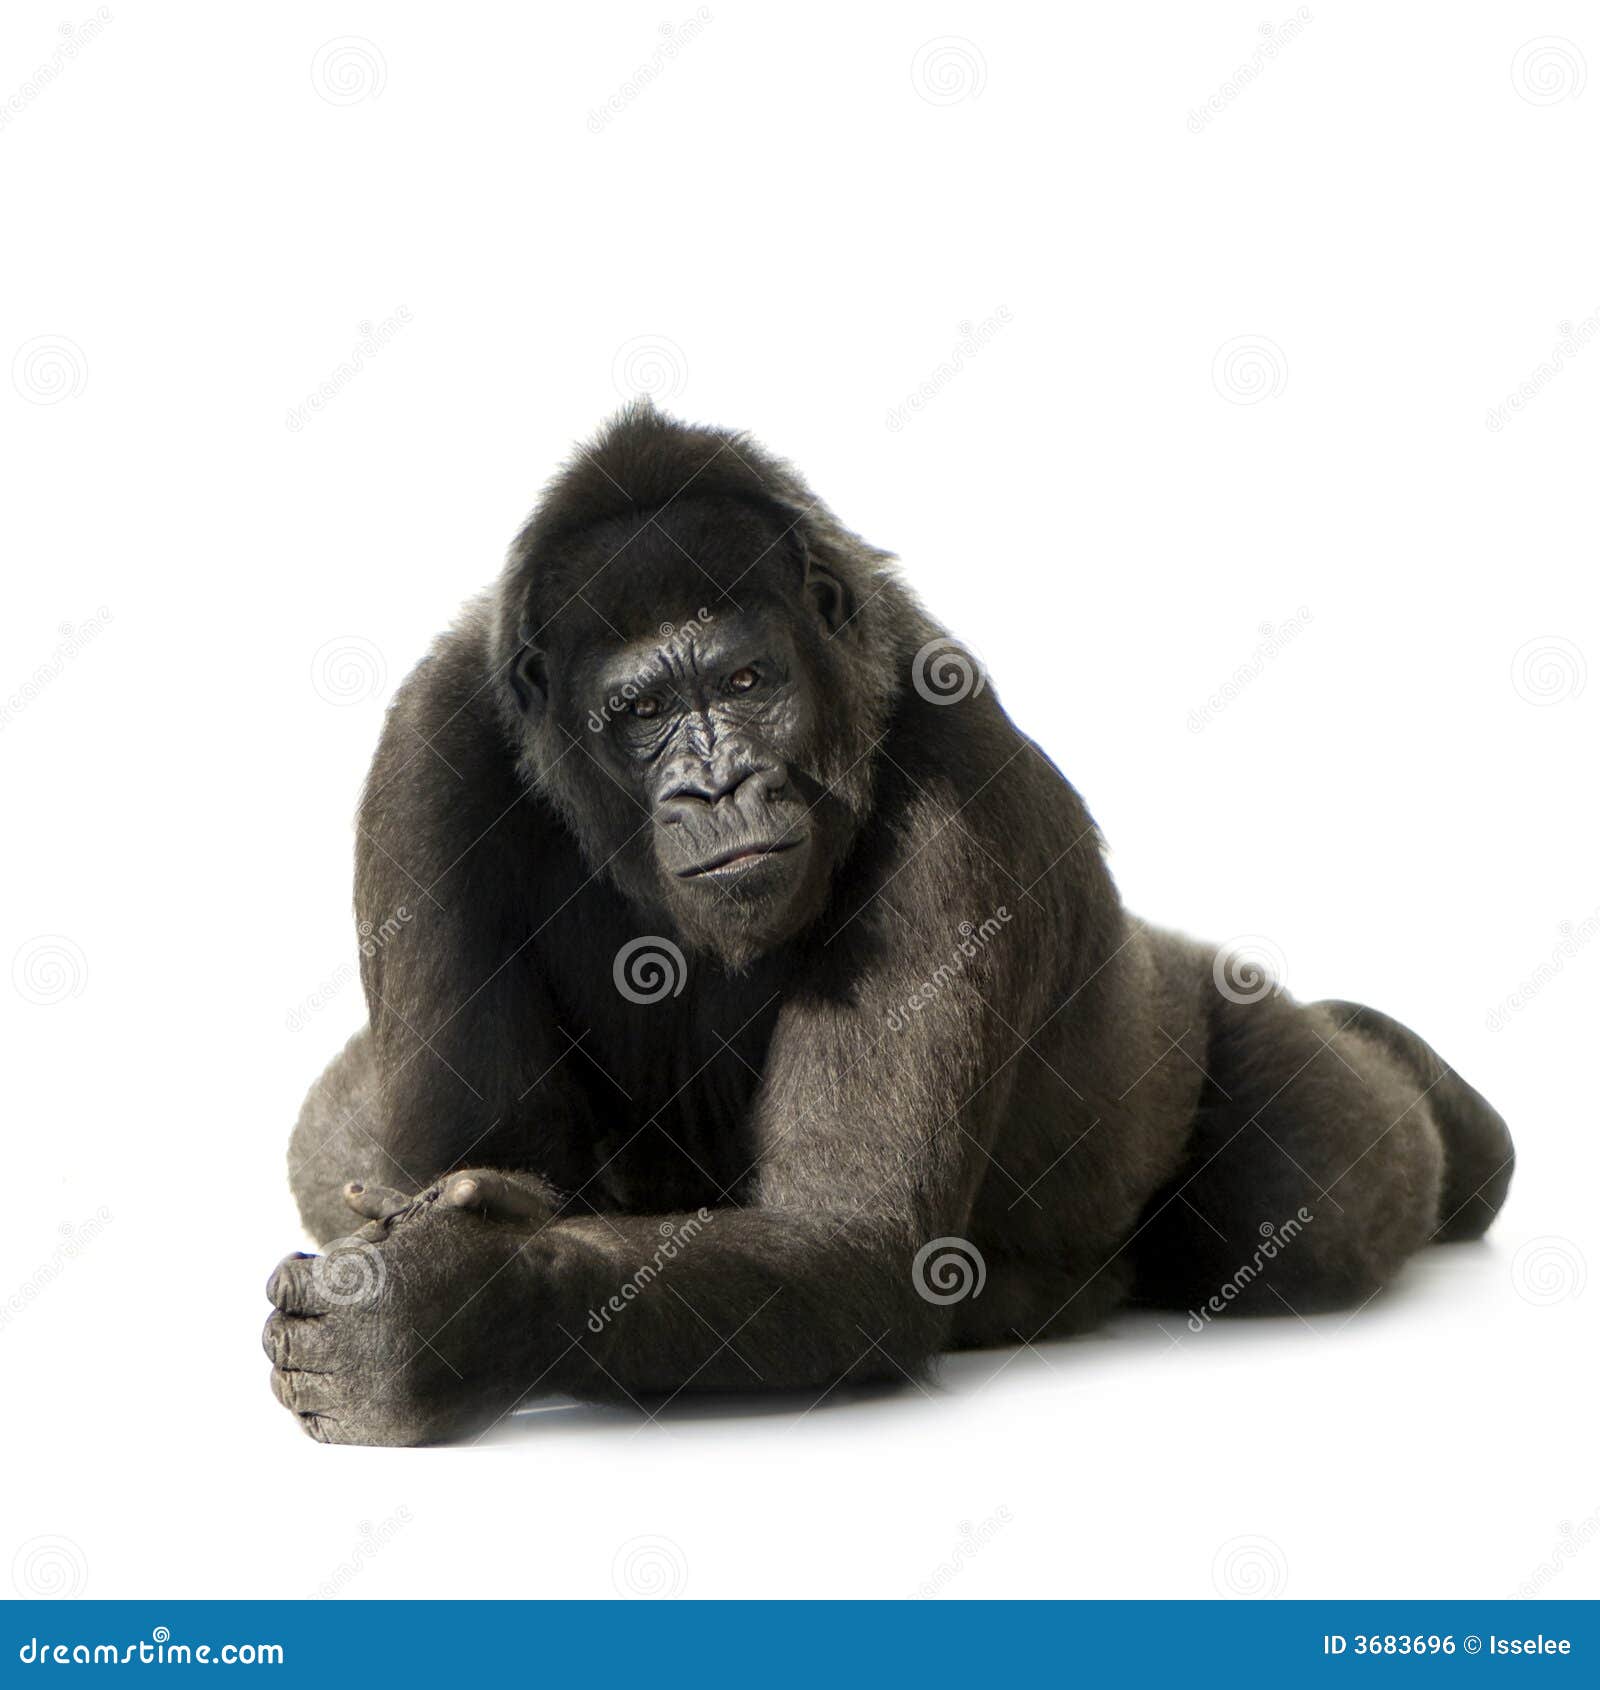 young silverback gorilla